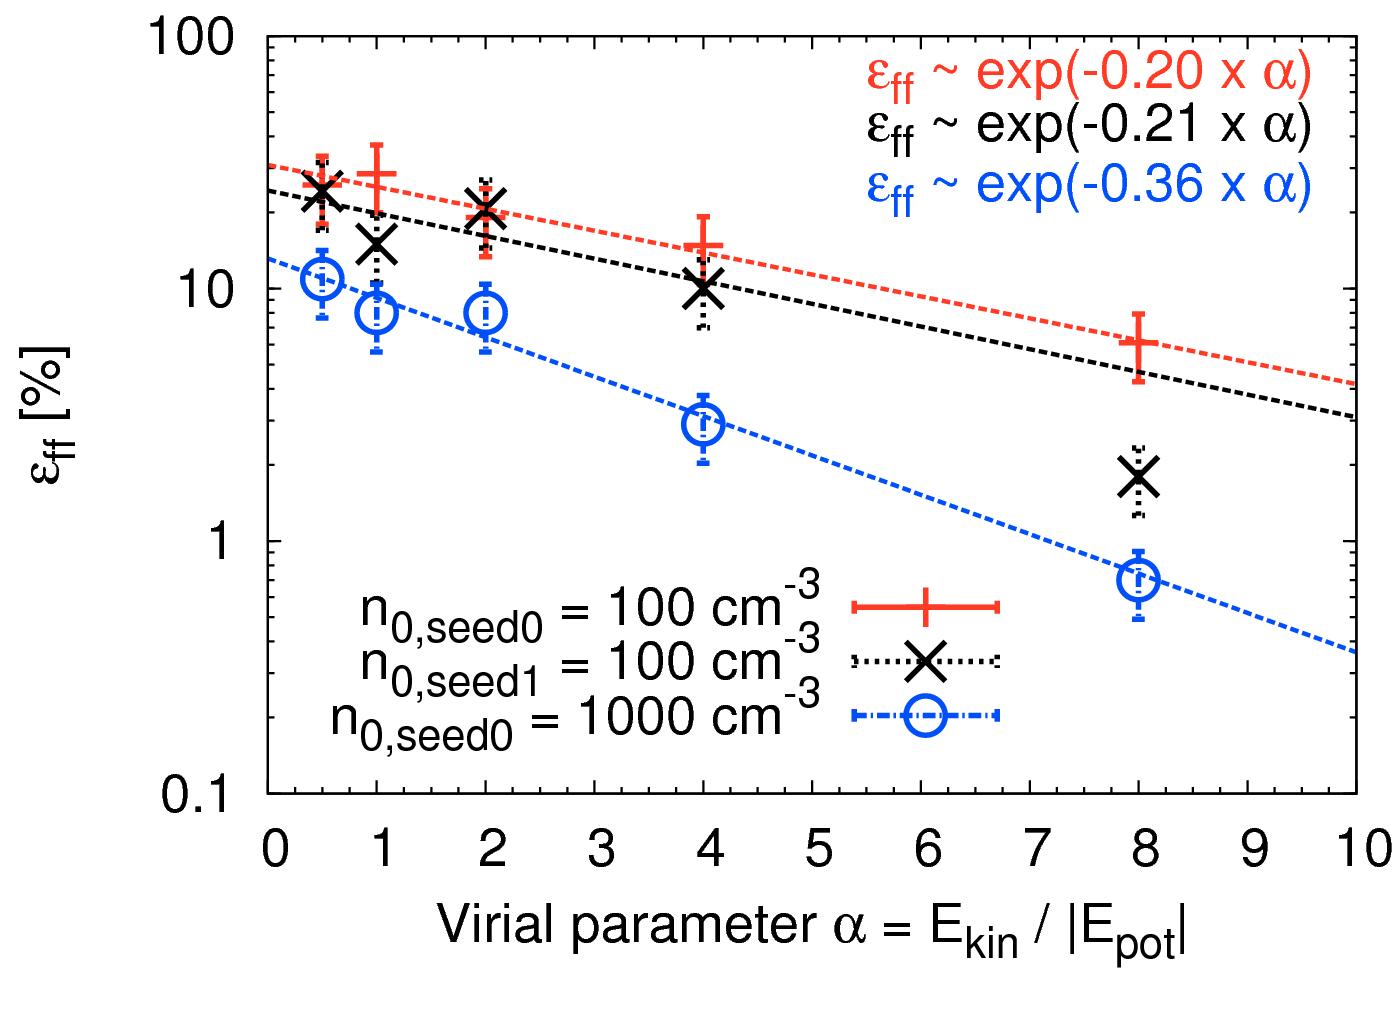 Star formation efficiencies against virial parameter